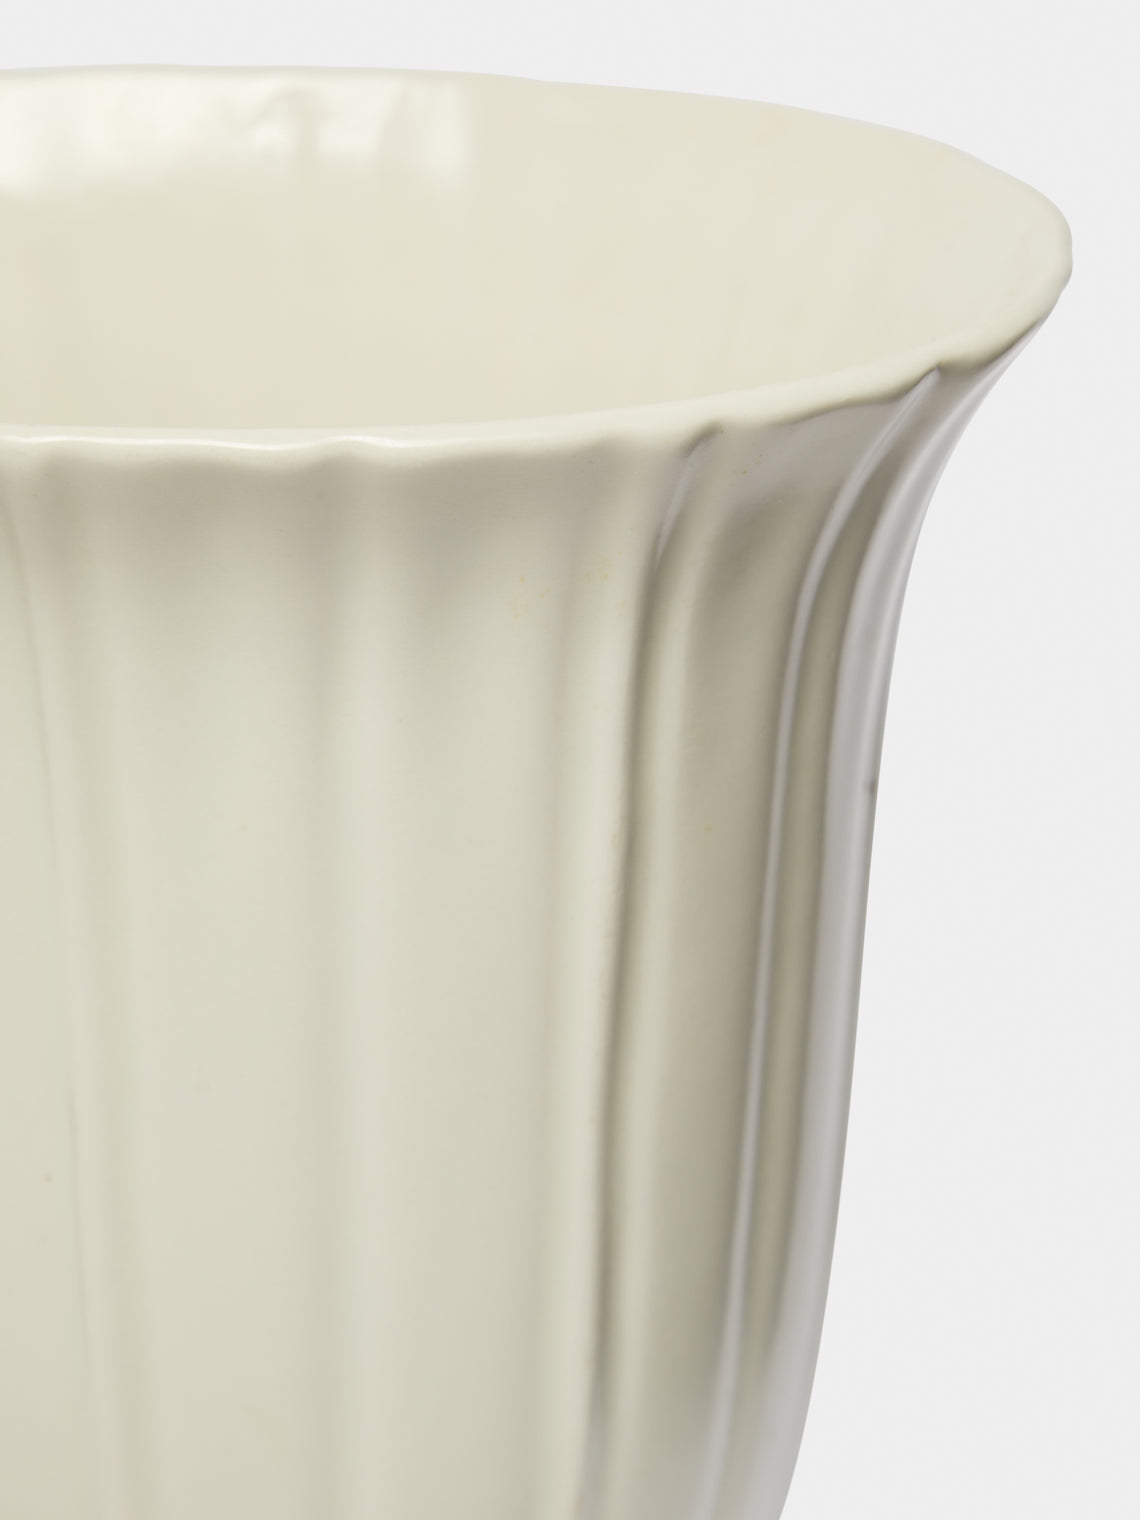 Antique and Vintage - 1930-1940 Tall Ceramic Vase - White - ABASK